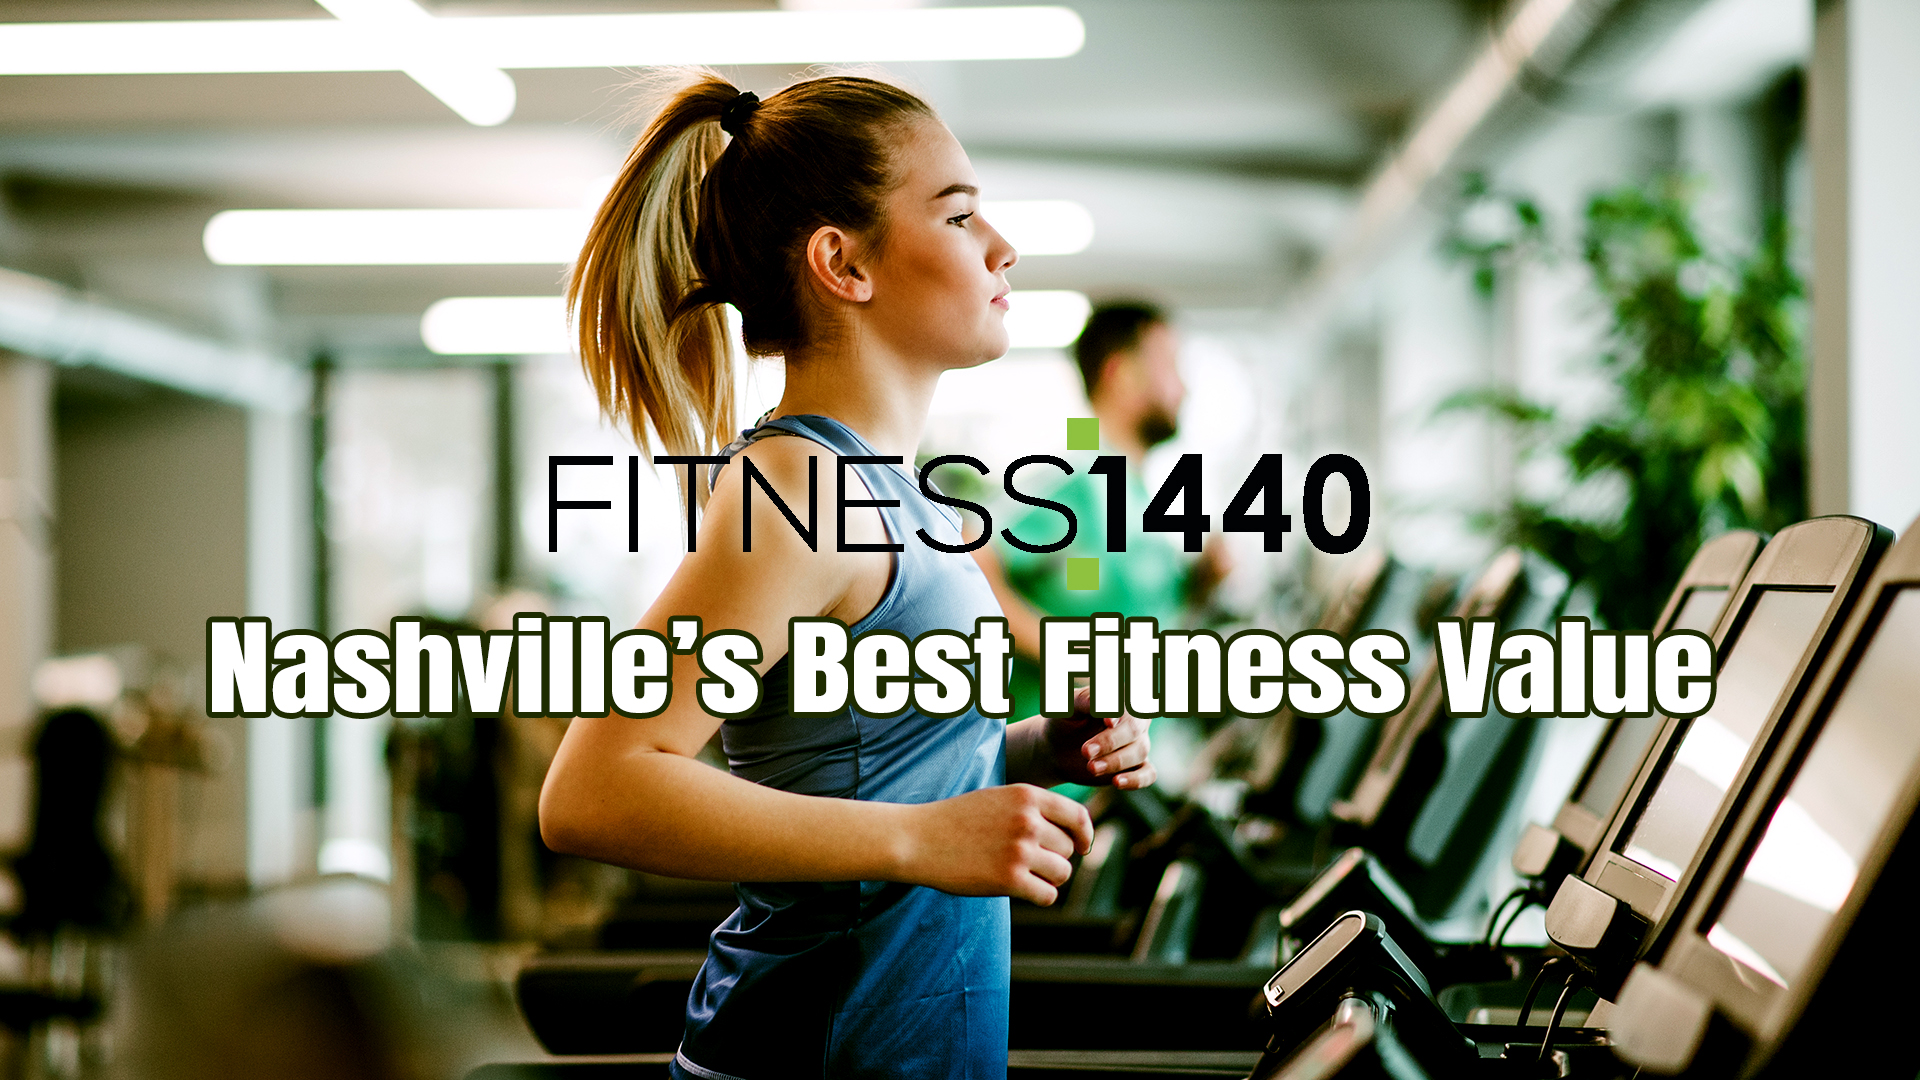 Fitness 1440 Nashville's Best Fitness Value - 2 Nashville 24-Hour Locations